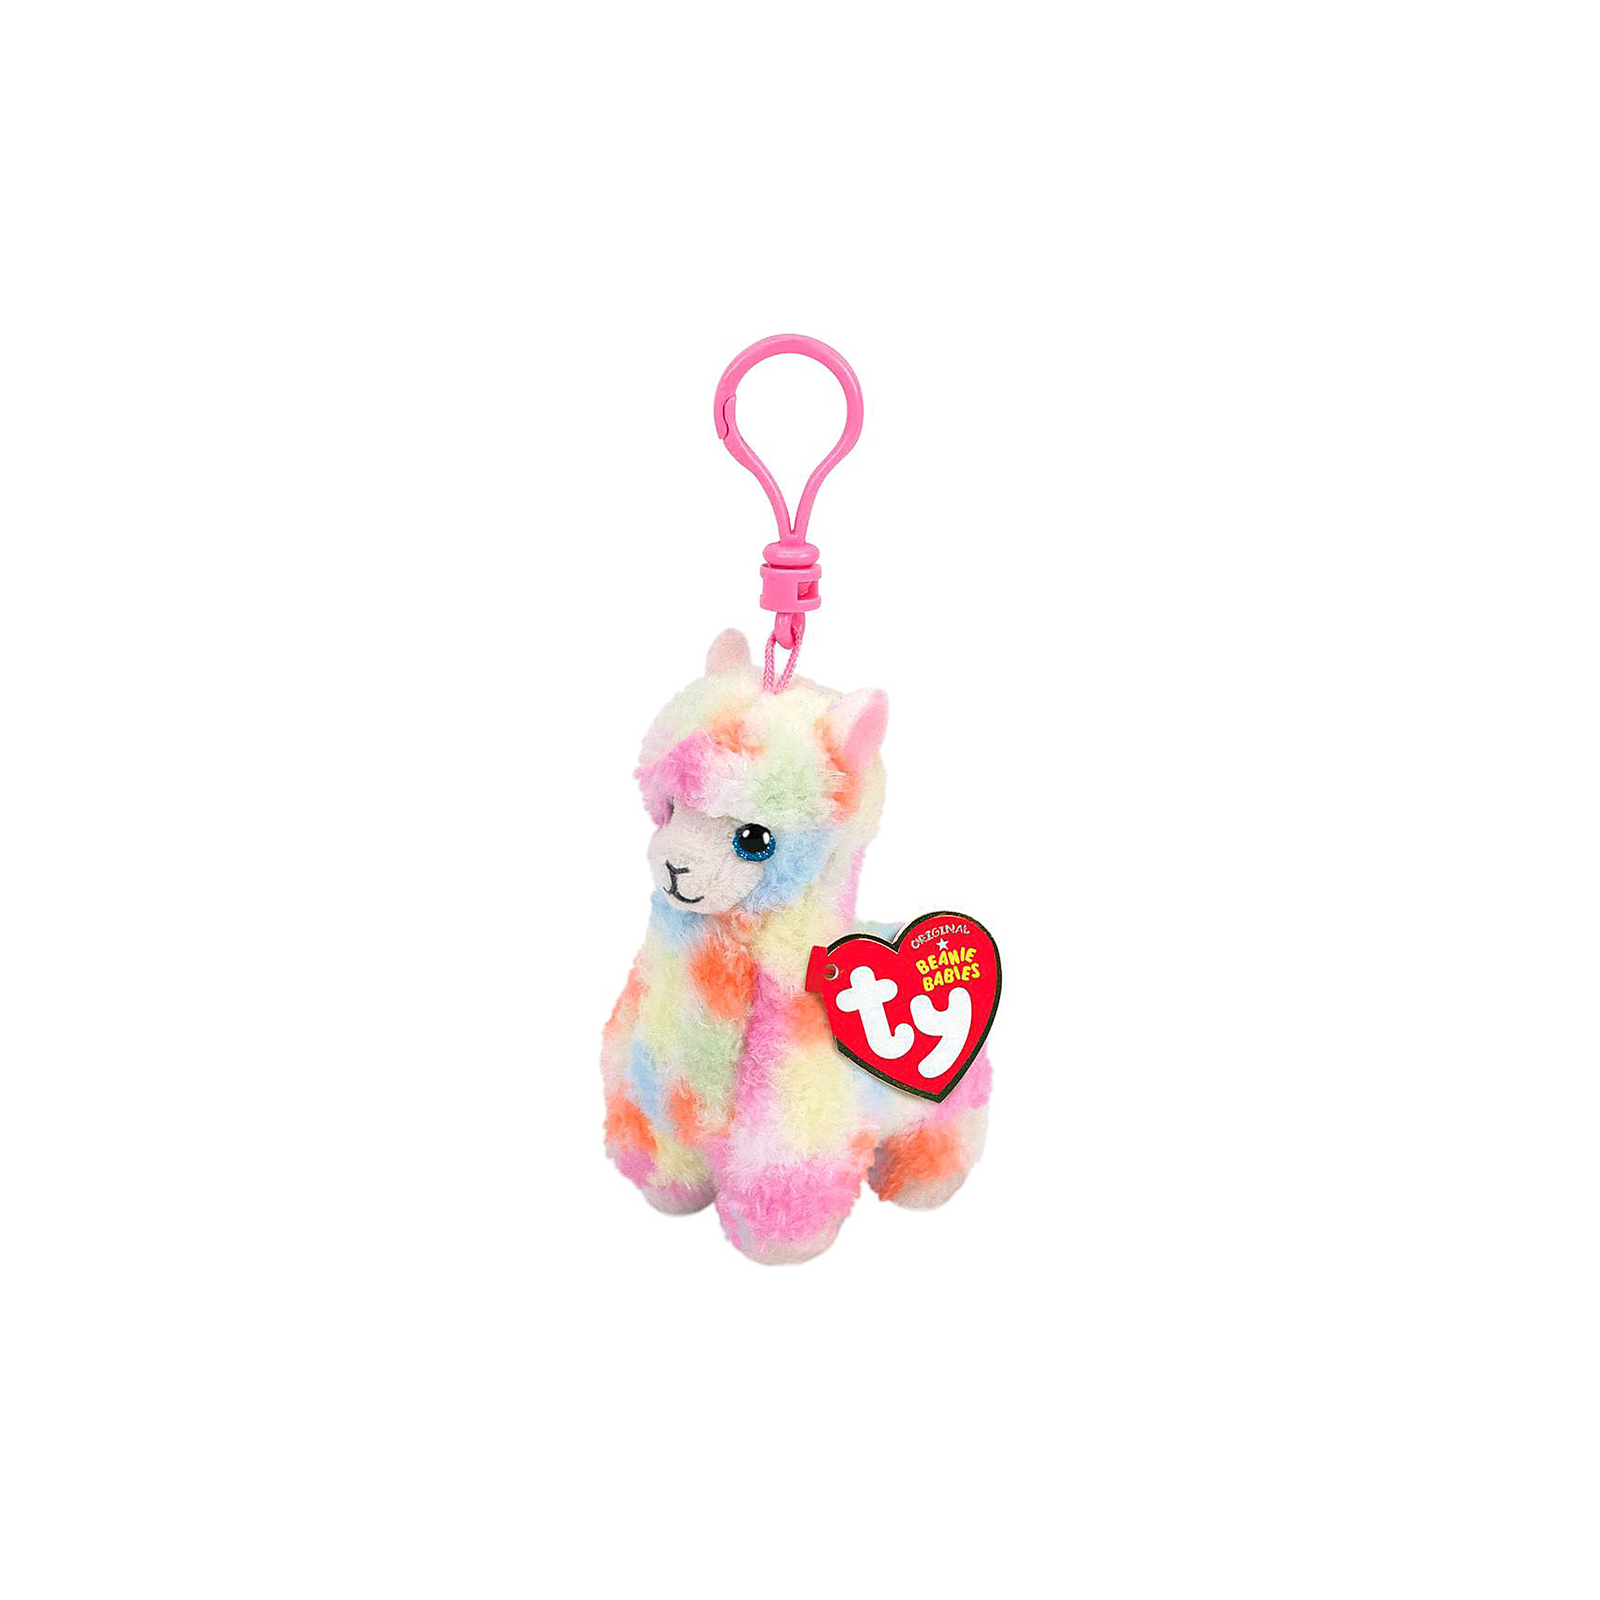 М'яка іграшка Ty Beanie Babies Різнобарвна лама Lola 12см (36601)